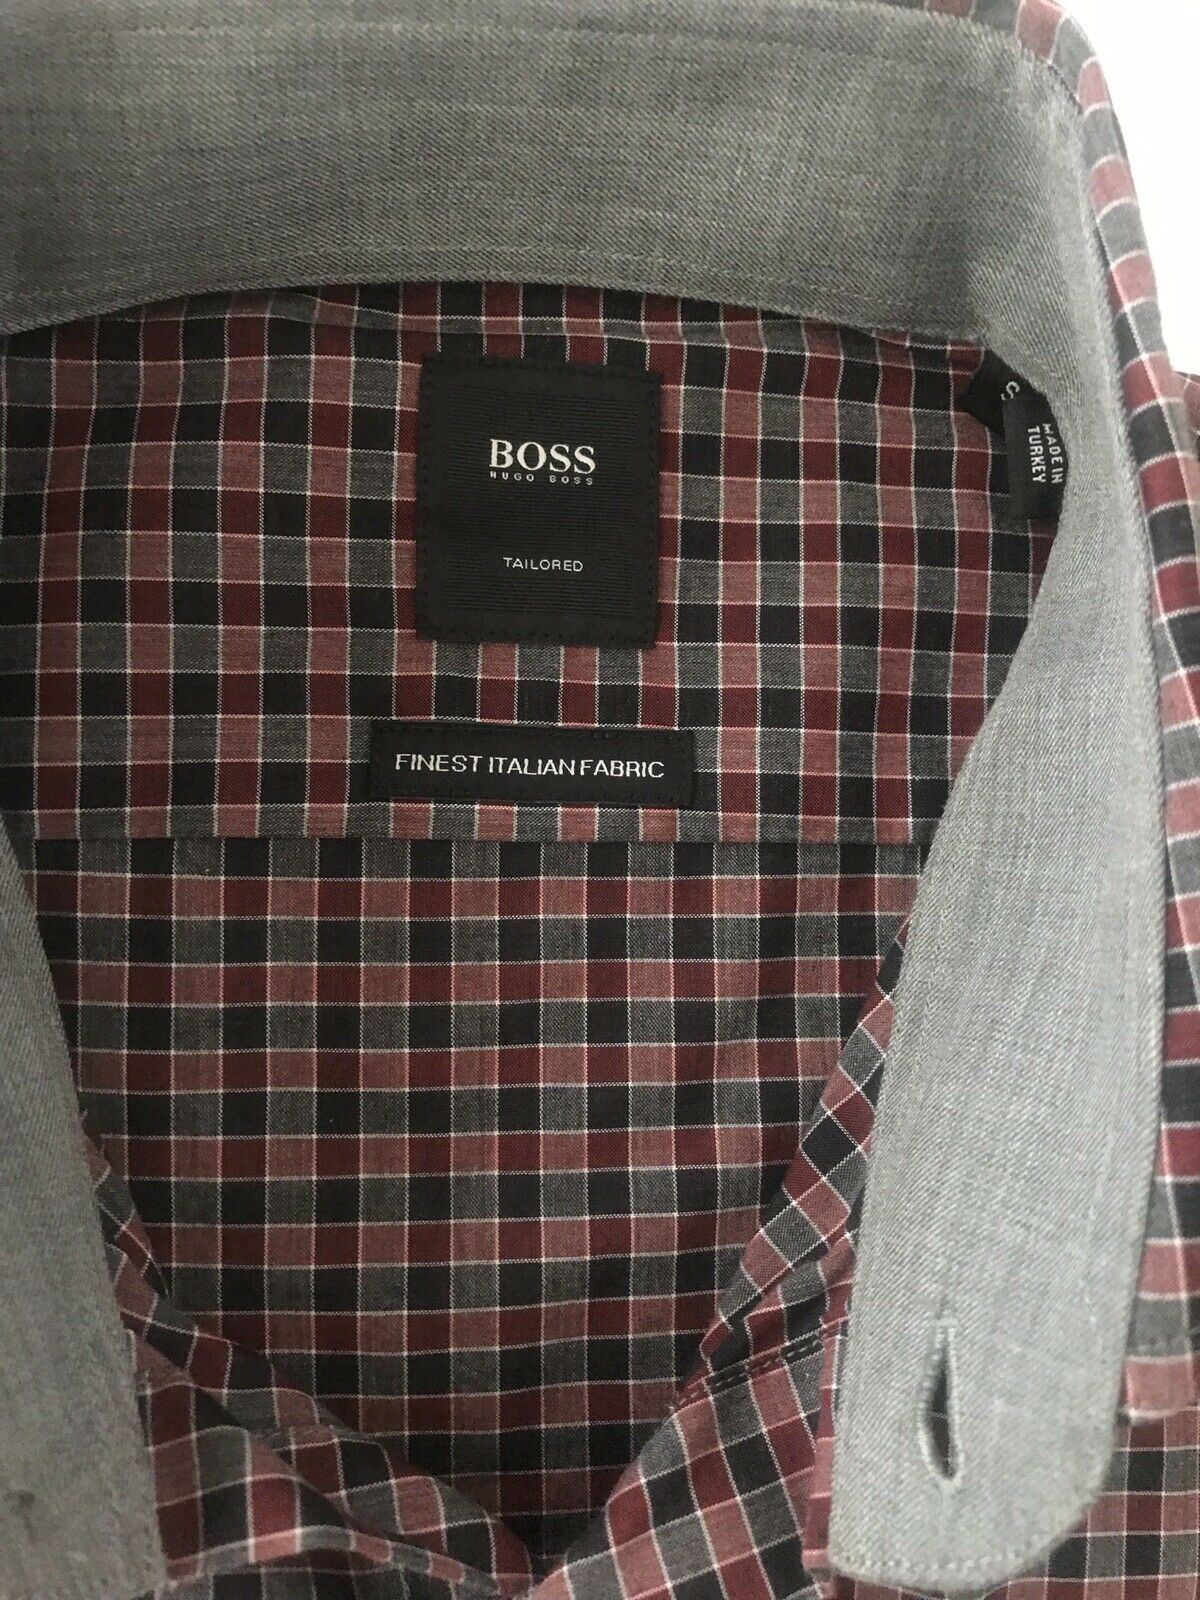 NWT $245 Hugo Boss T-Scot Mens Tailored Cotton Dark Red Dress Shirt Size S